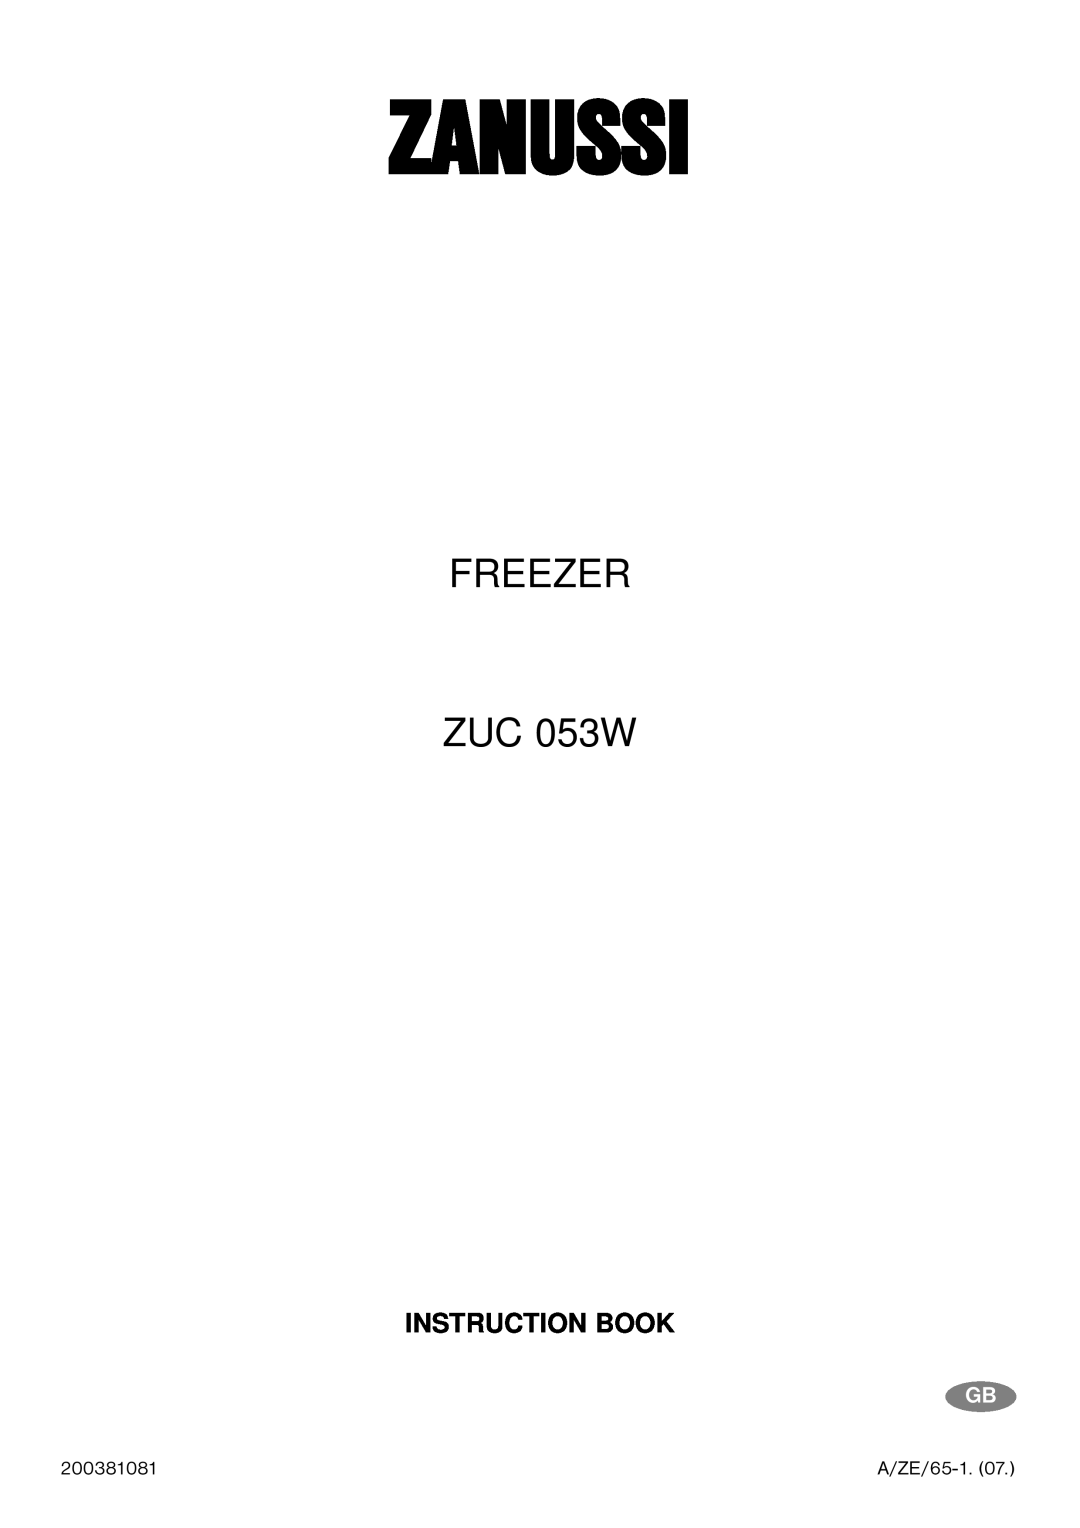 Zanussi manual Zanussi, FREEZER ZUC 053W, Instruction Book 